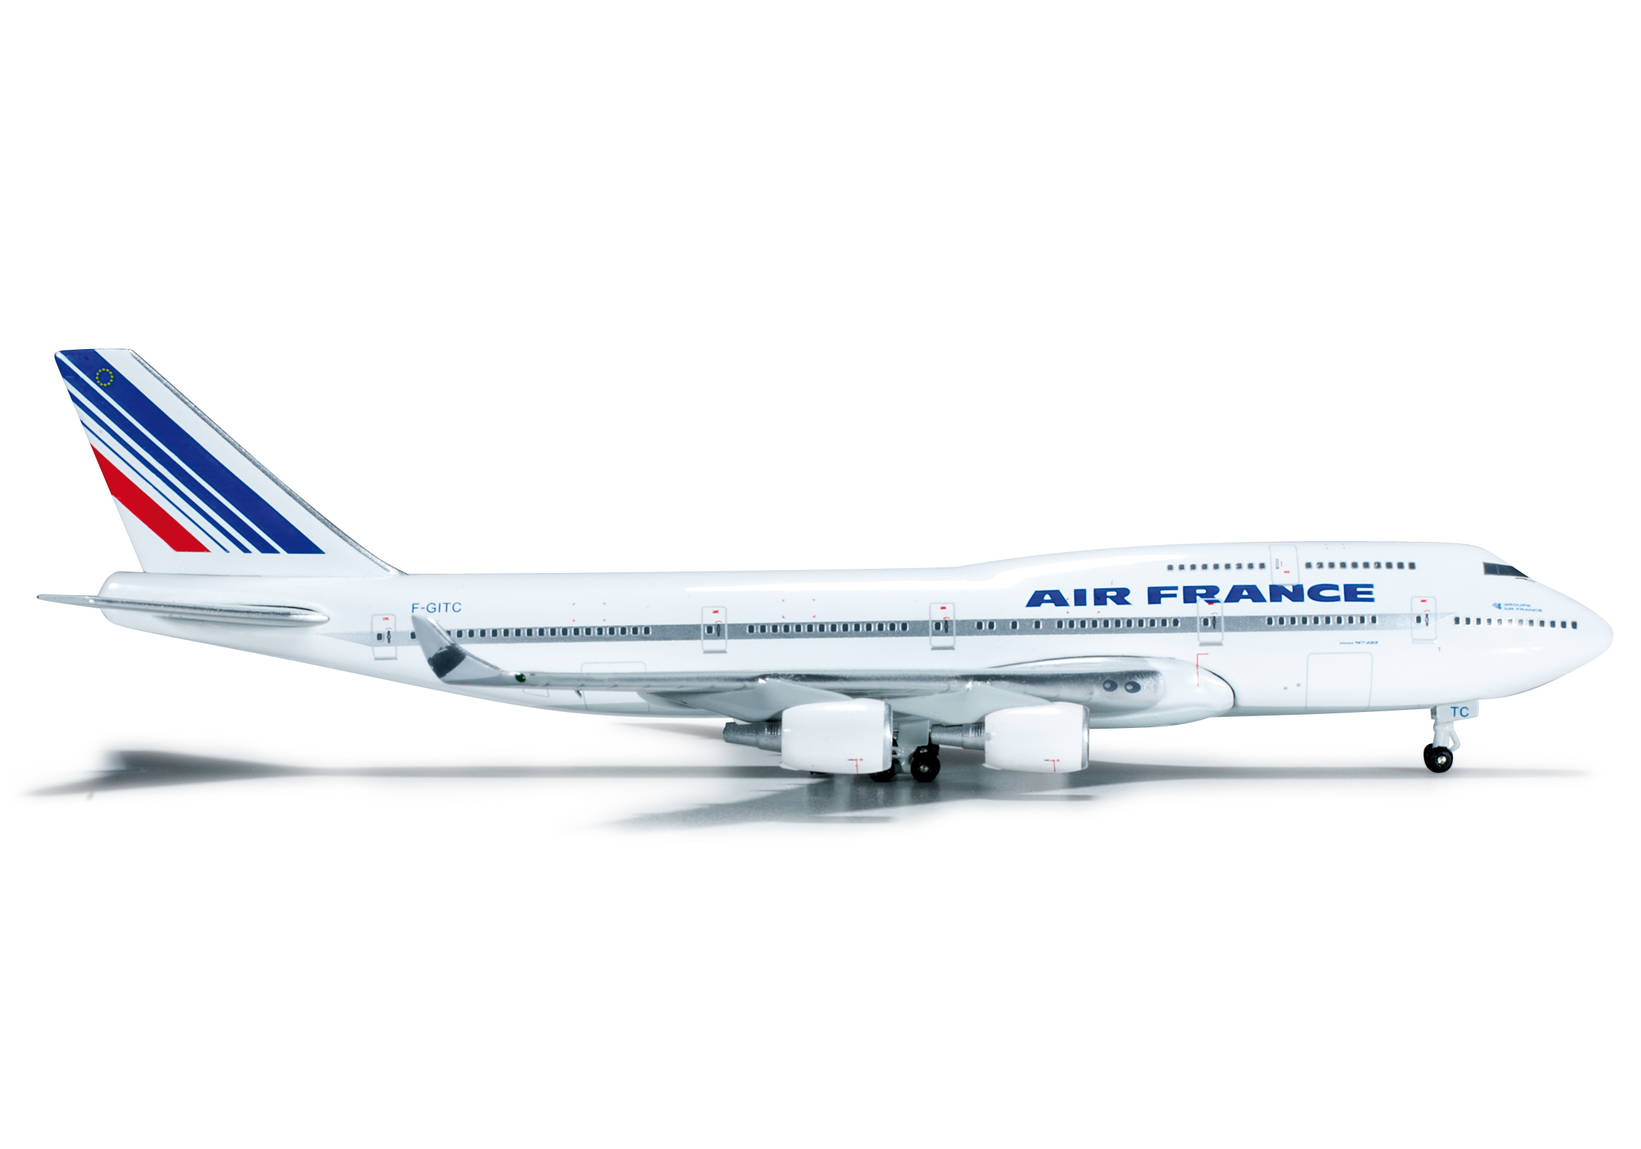 Air France B747-400 "Silver Cheatline Test Livery"